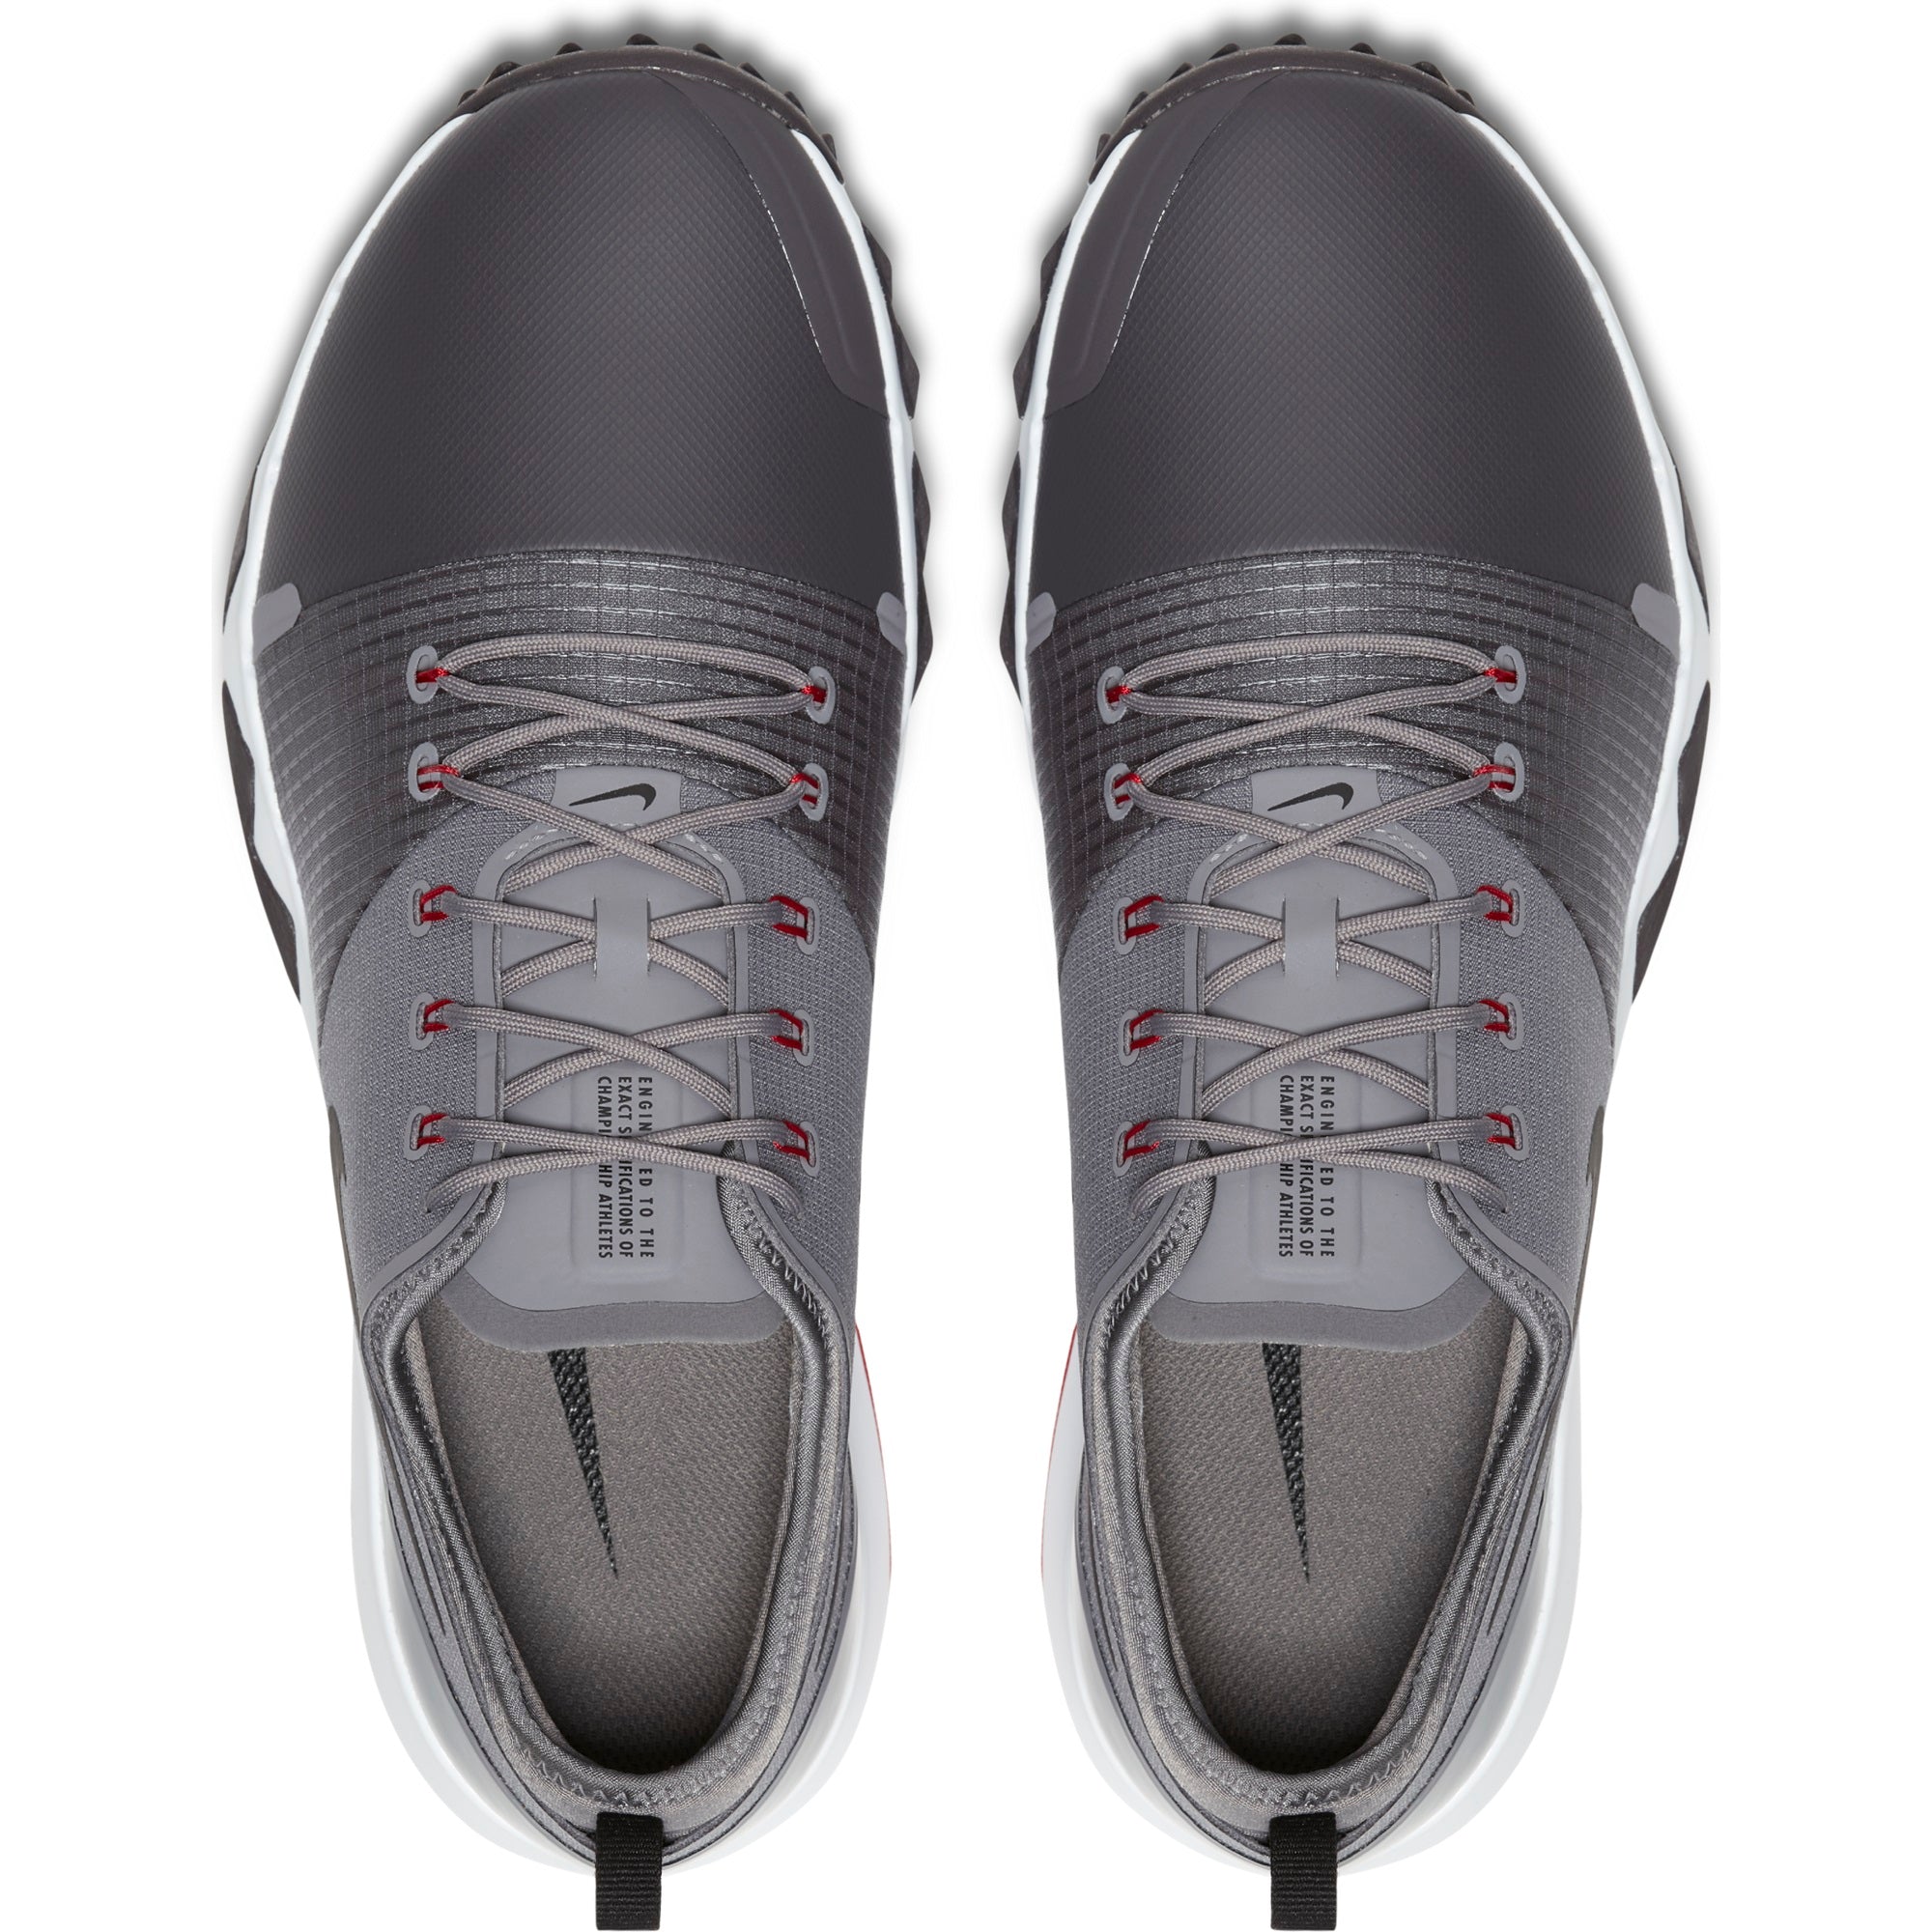 Nike FI Impact 3 Golf Shoes AH6959 